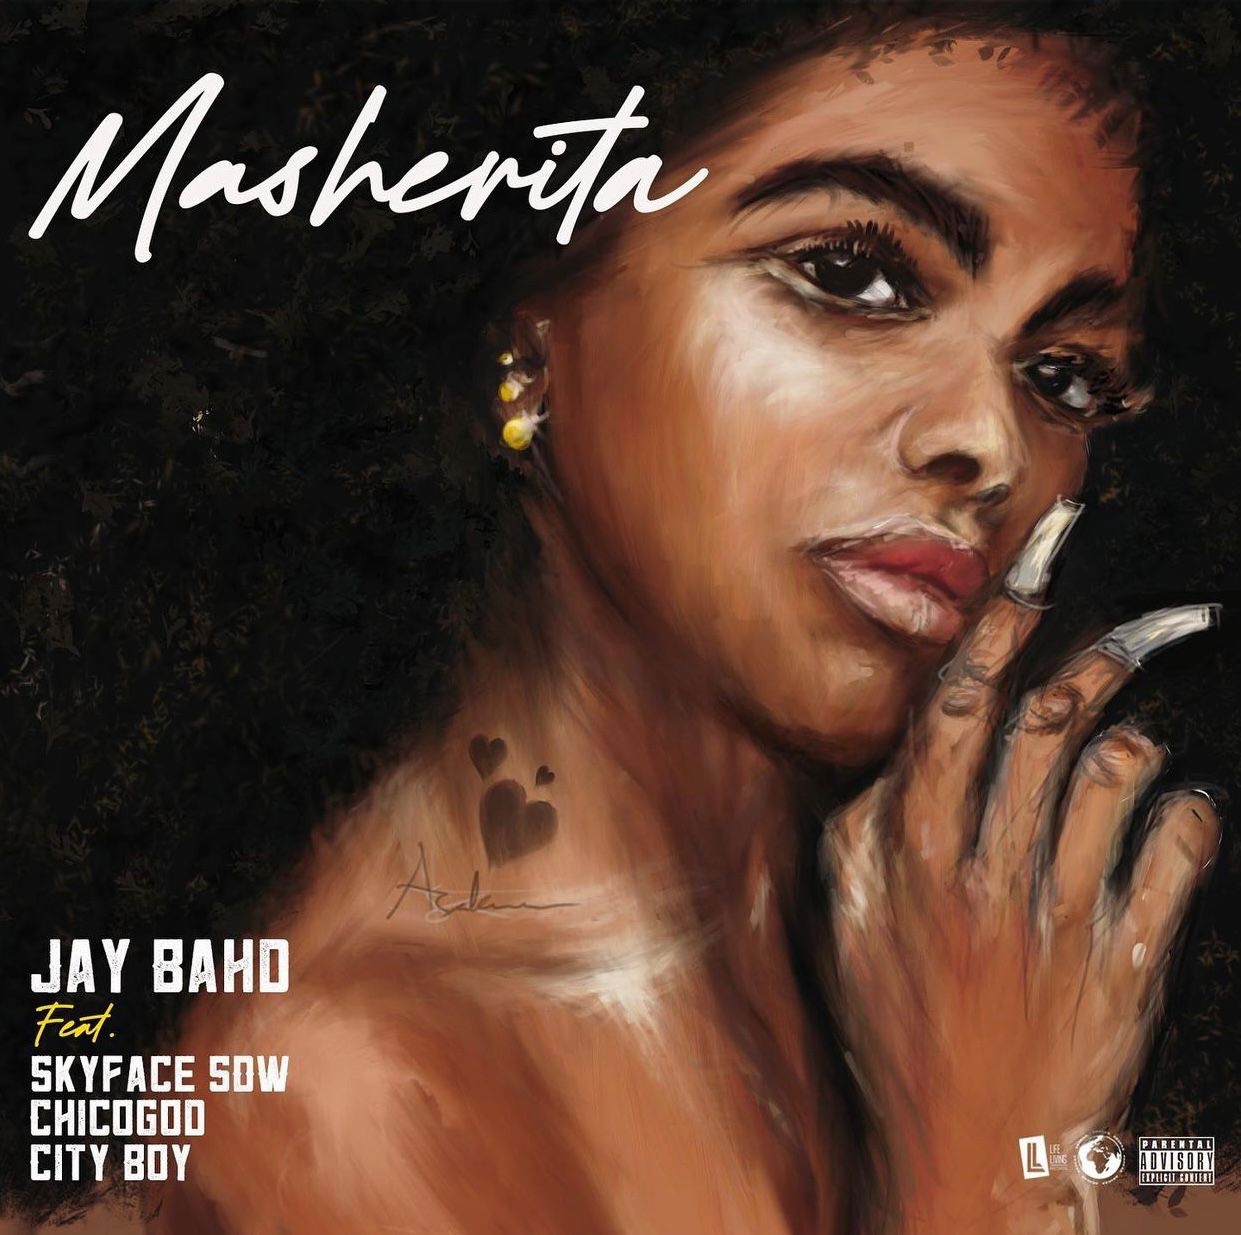 Jay Bahd - Masherita feat. Skyface SDW, City boy, Chicogod